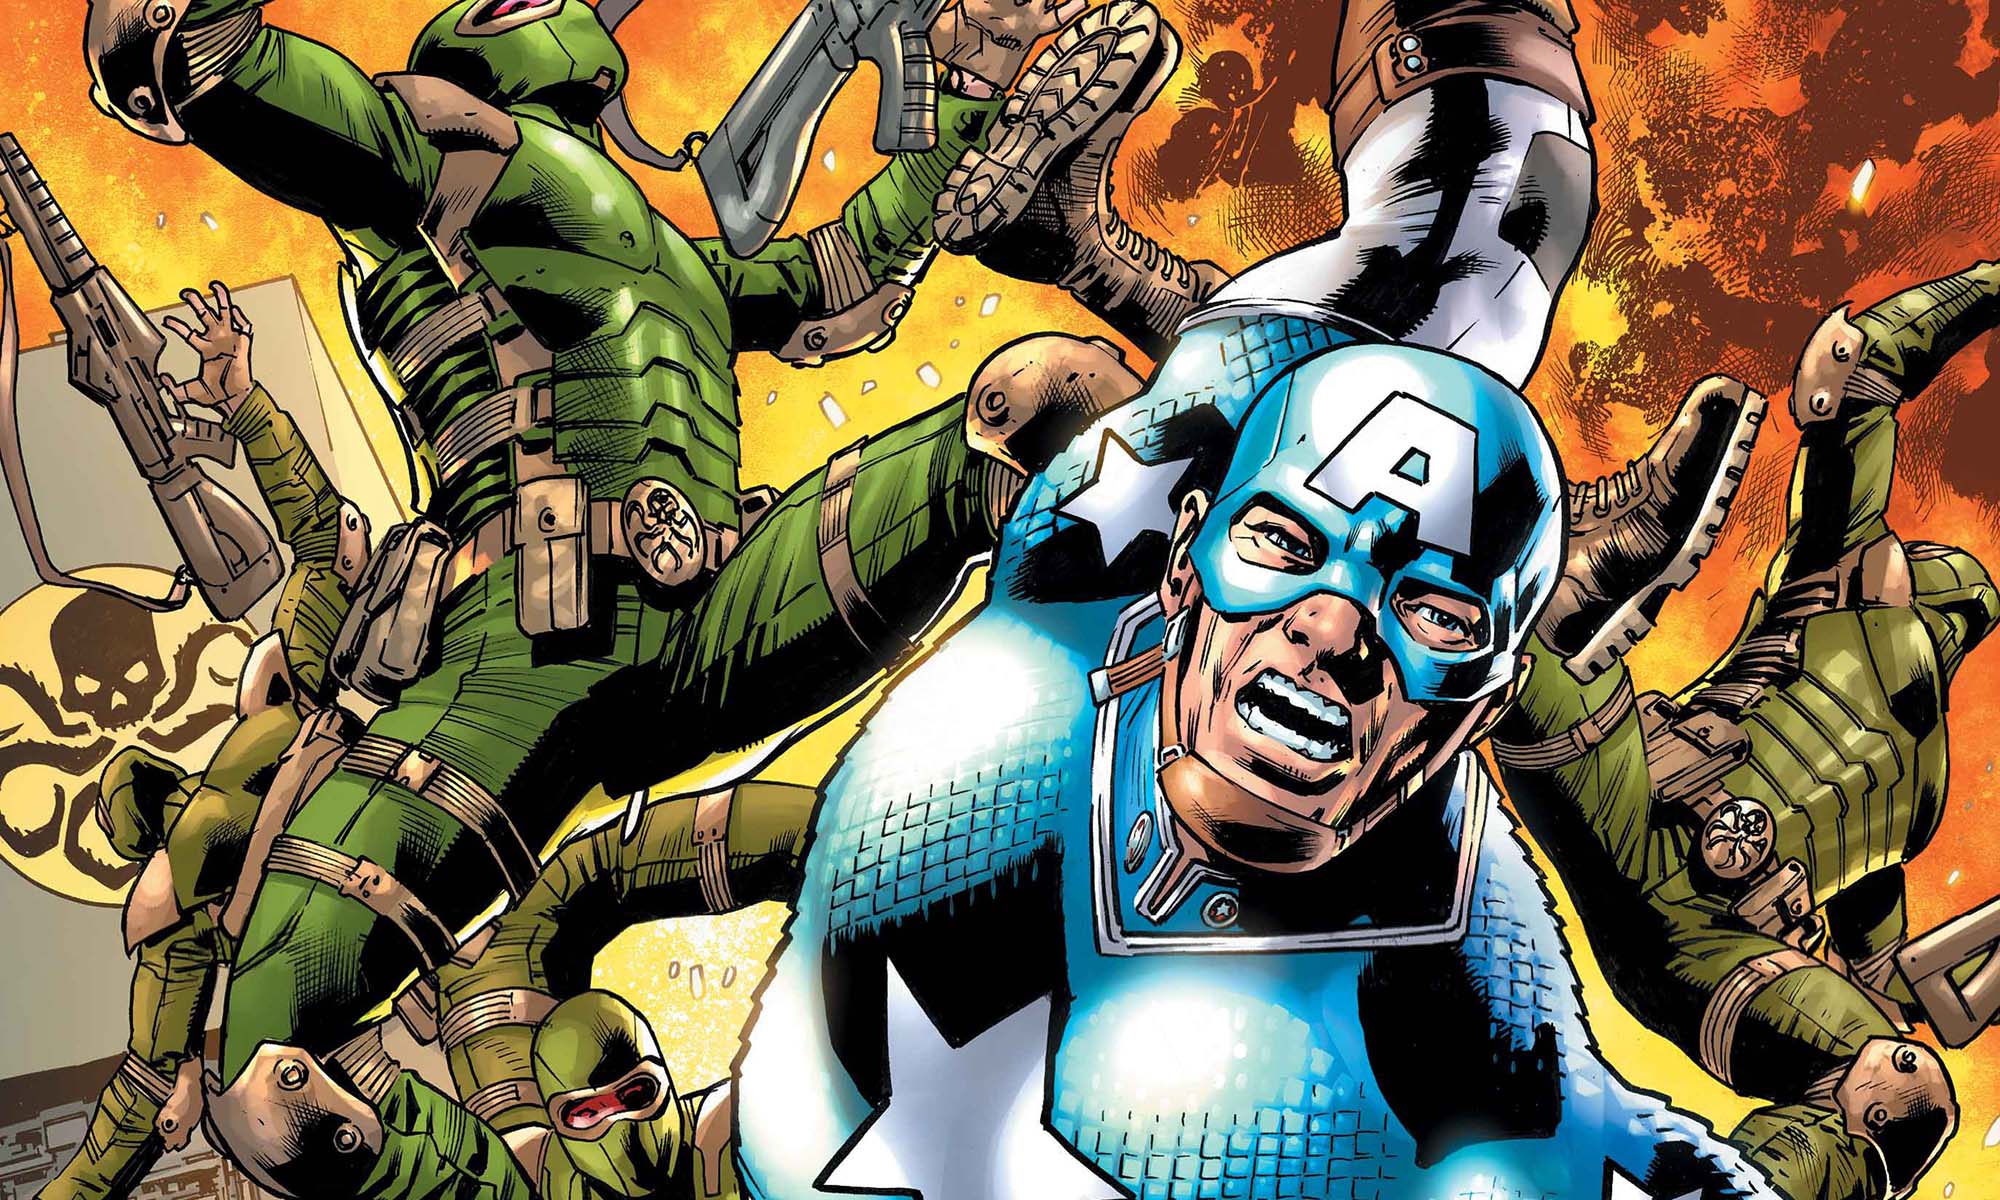 Captain America: Sentinel of Liberty #13